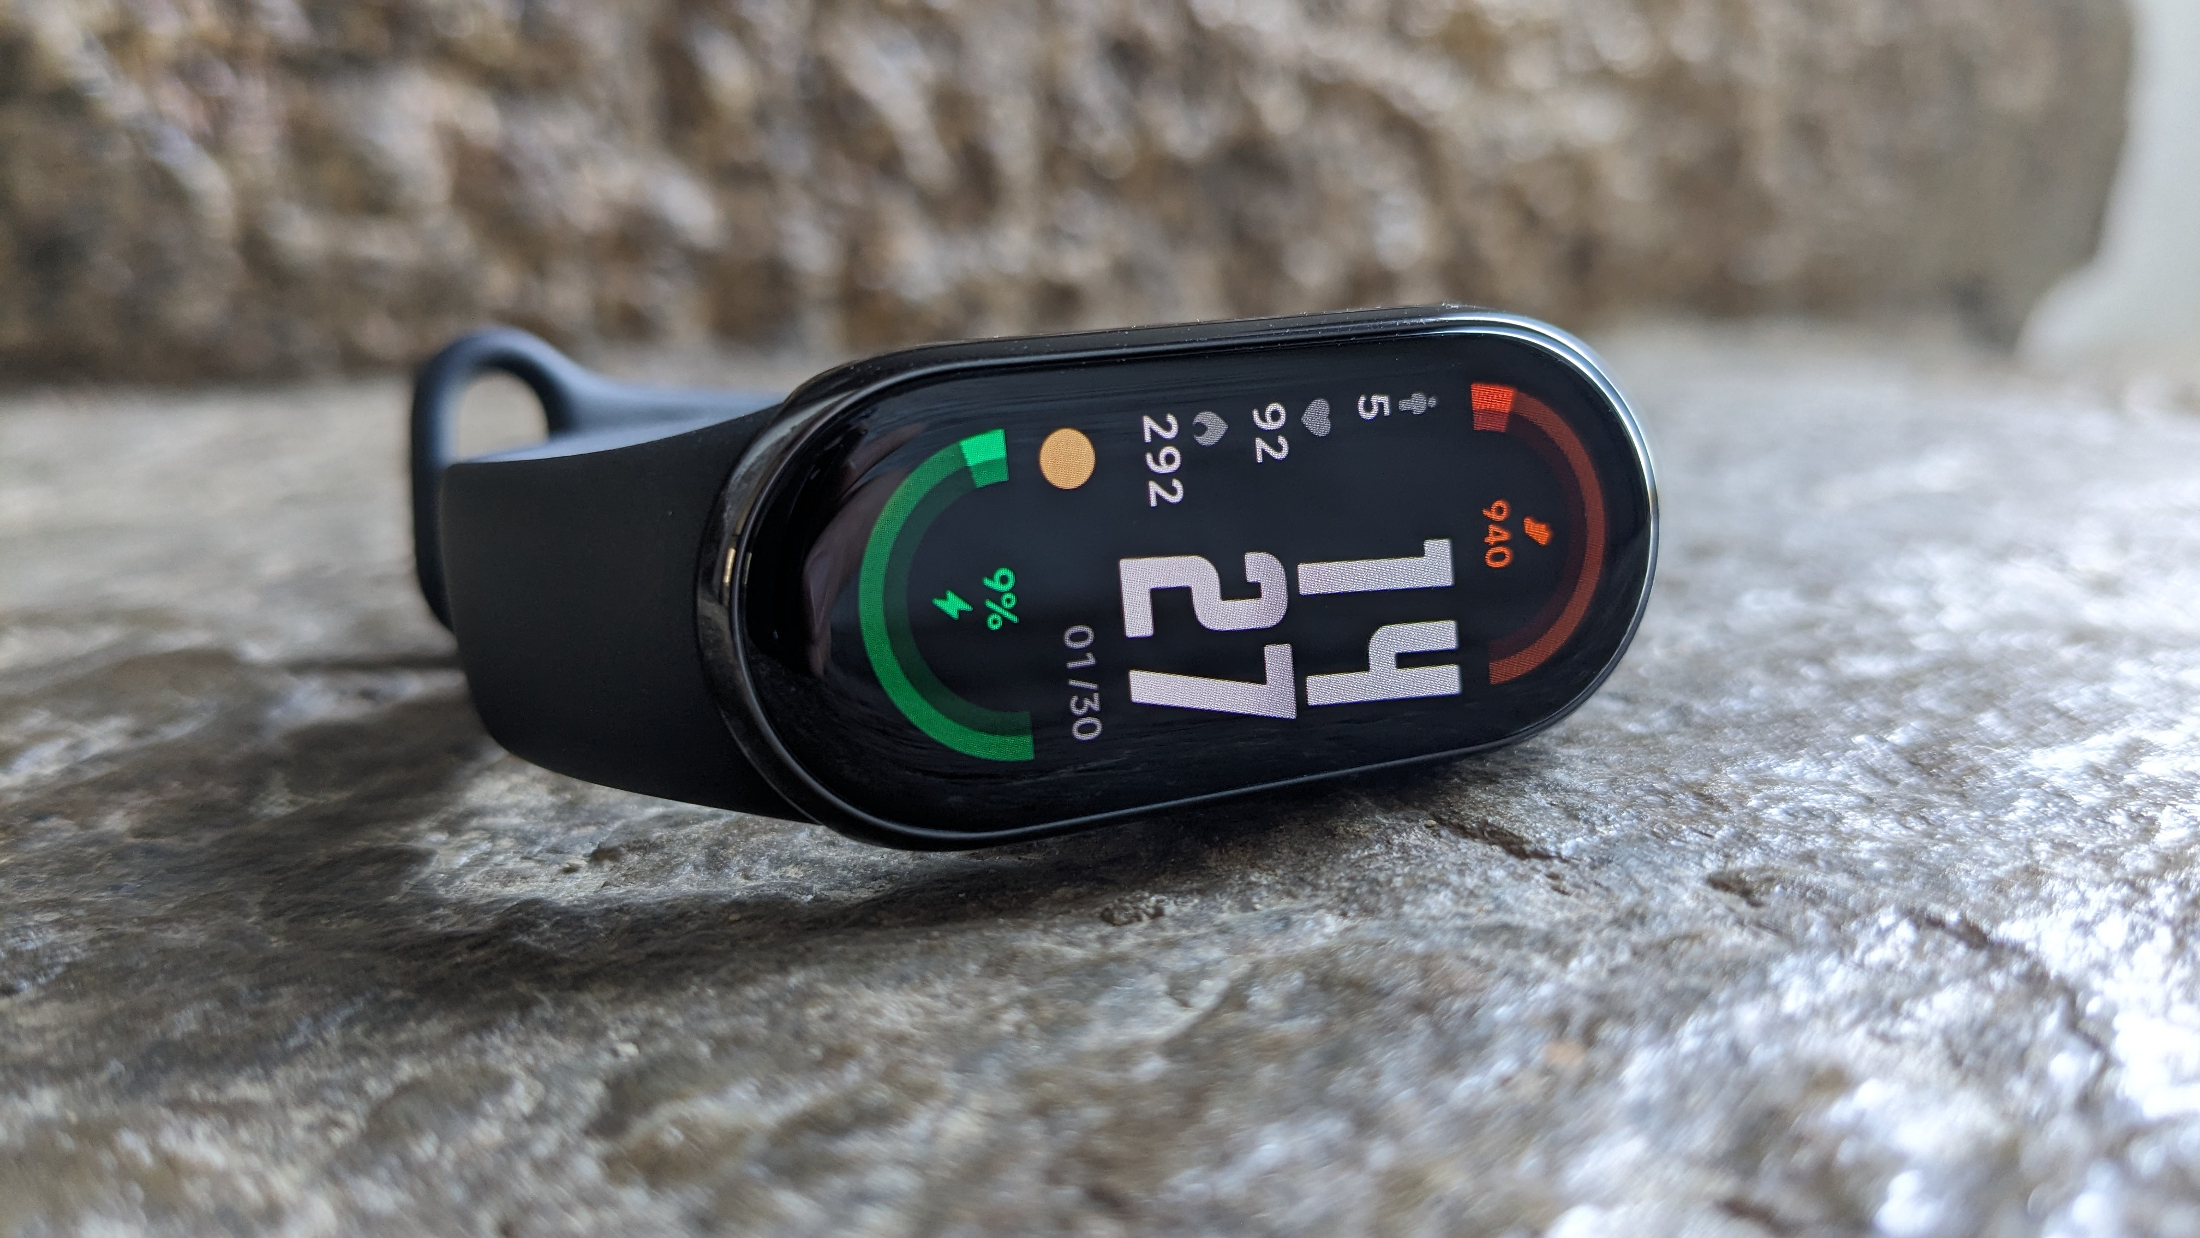 Fitbit Inspire 2 Review: Impressive Entry-Level Fitness Tracker - Tech  Advisor